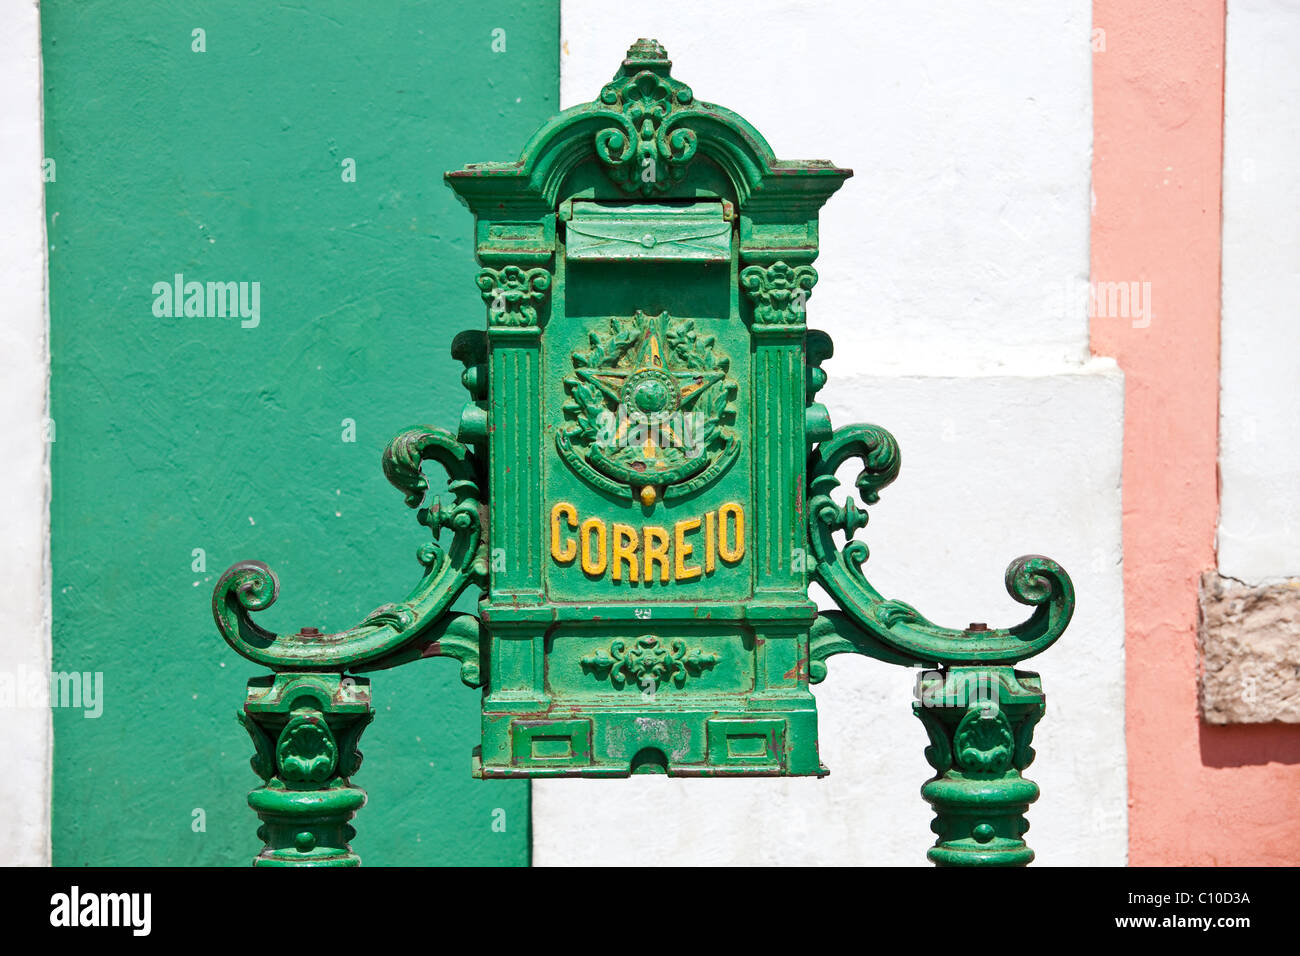 Portuguese mailbox in Pelourinho or old town, Salvador, Brazil Stock Photo